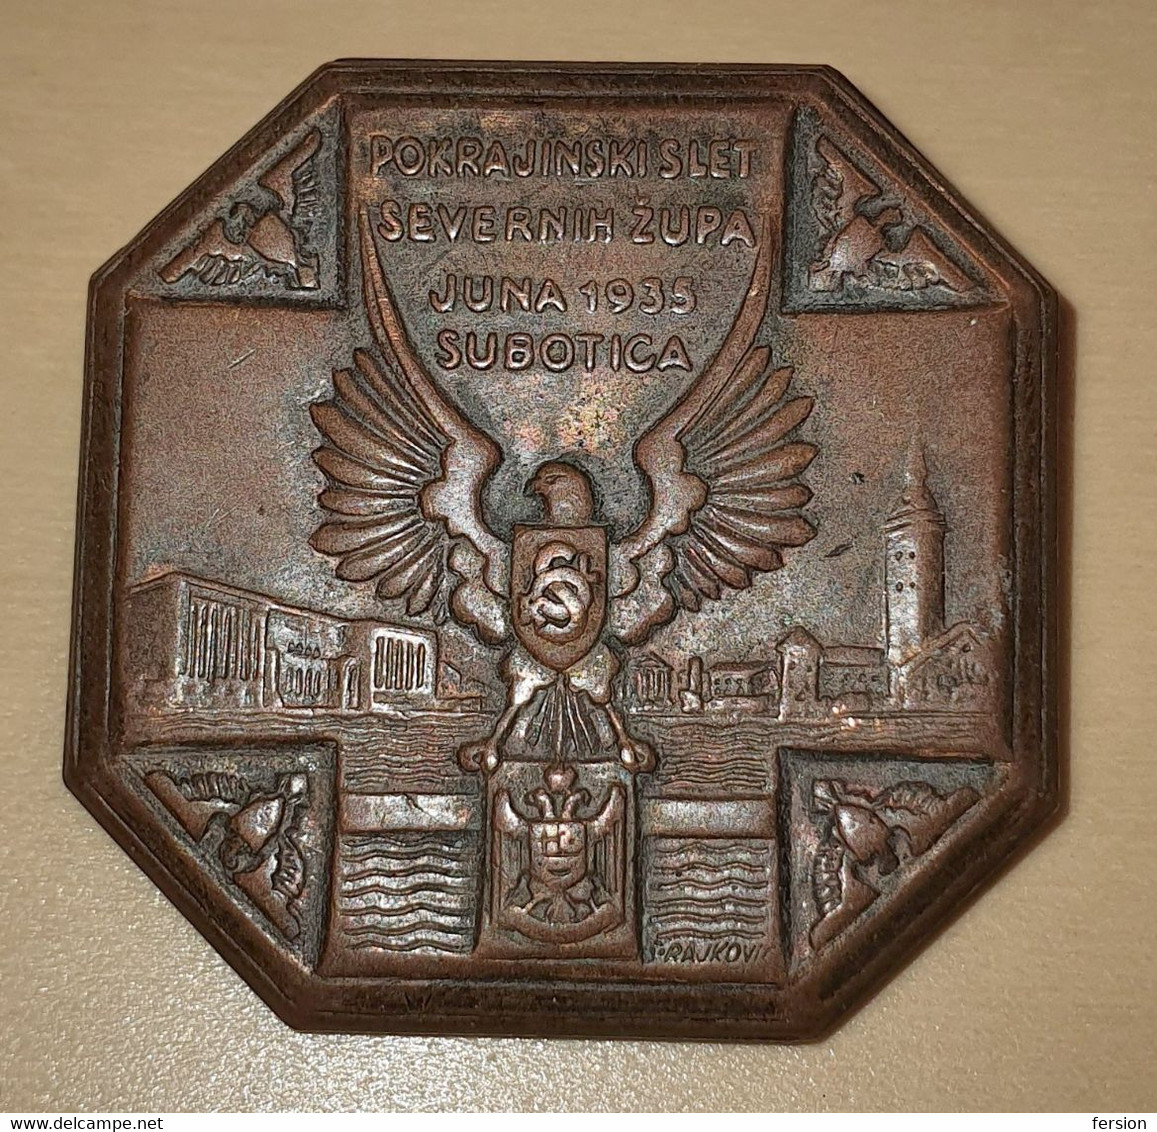 Sokolski SOKOL Slet / Scouts Scout Meeting - Pin Badge Pin / Yugoslavia Serbia SUBOTICA Szabadka 1935 Falcon - Tir à L'Arc